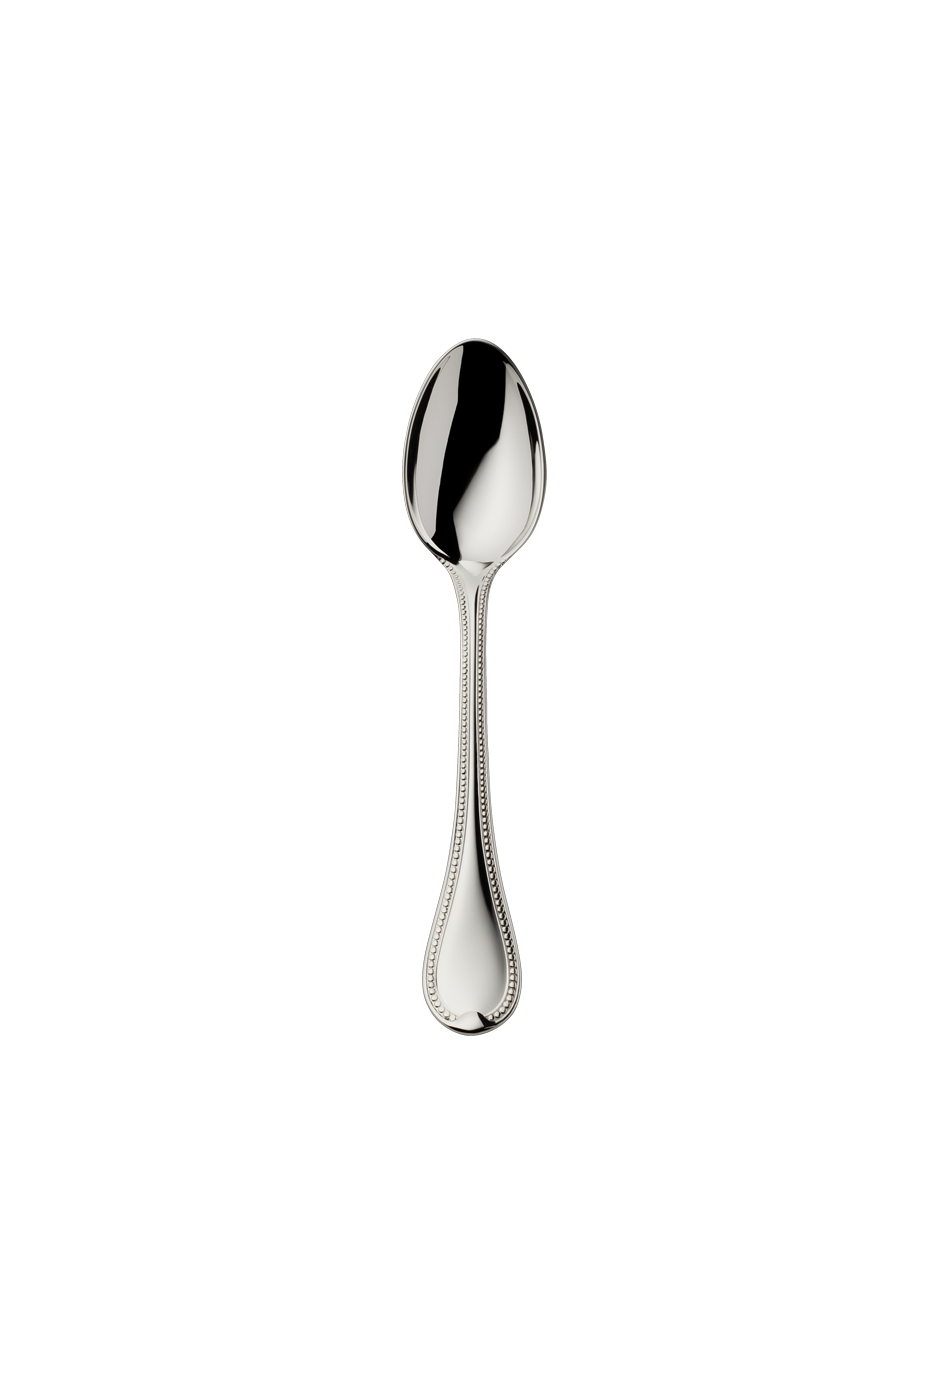 Franz. Perl Coffee Spoon 14,5 Cm (150g massive silverplated)